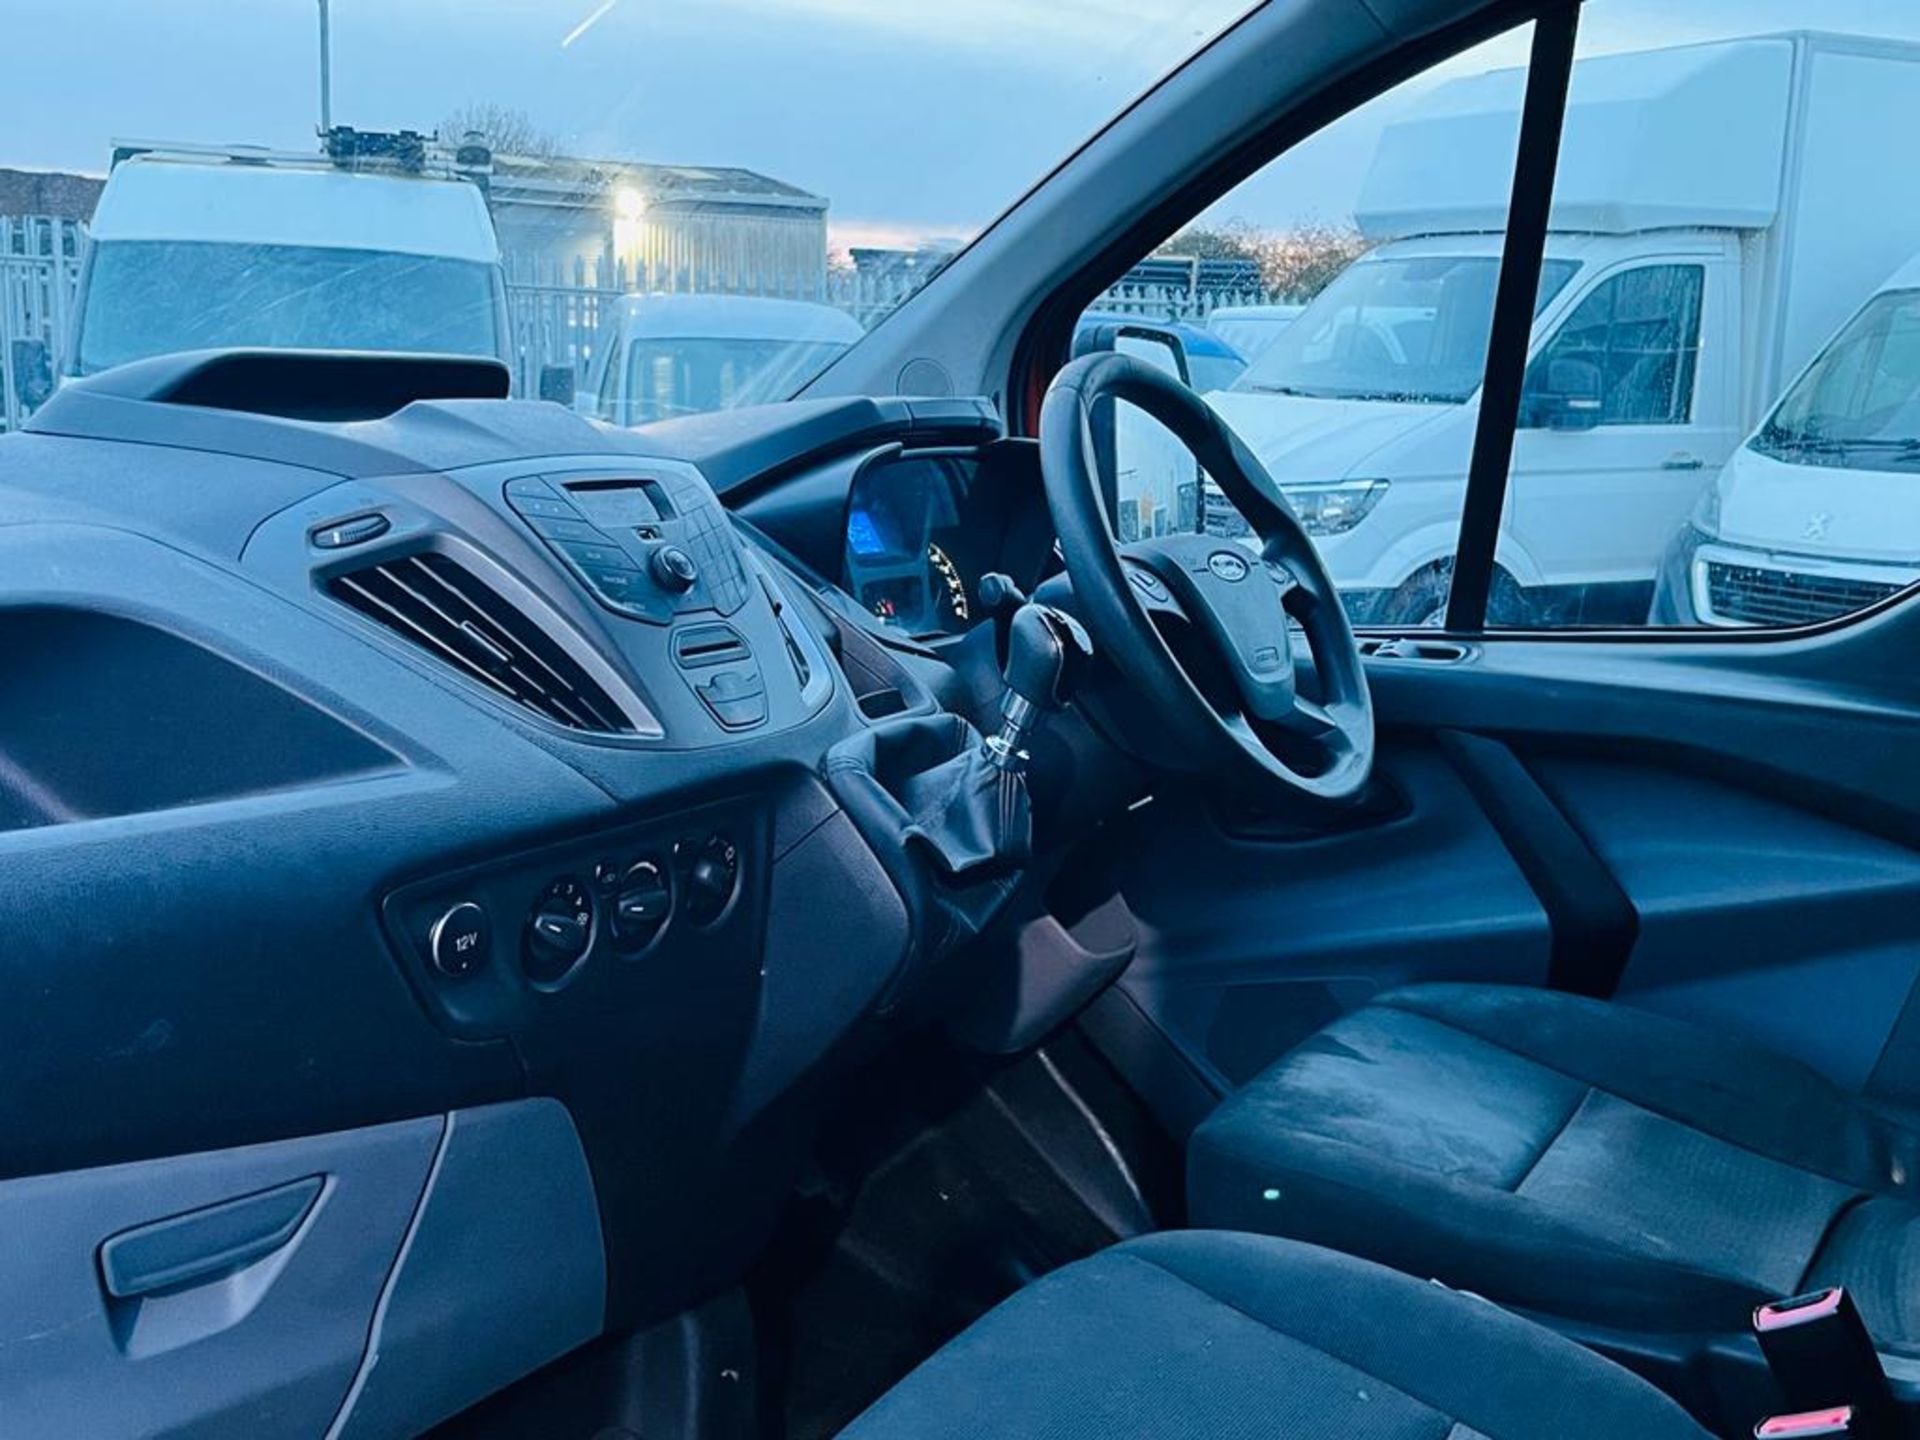 Ford Transit Custom 2.2 TDCI 100 290 LWB H3 2015 '65 Reg' Panel Van - Van Vault - Image 27 of 30